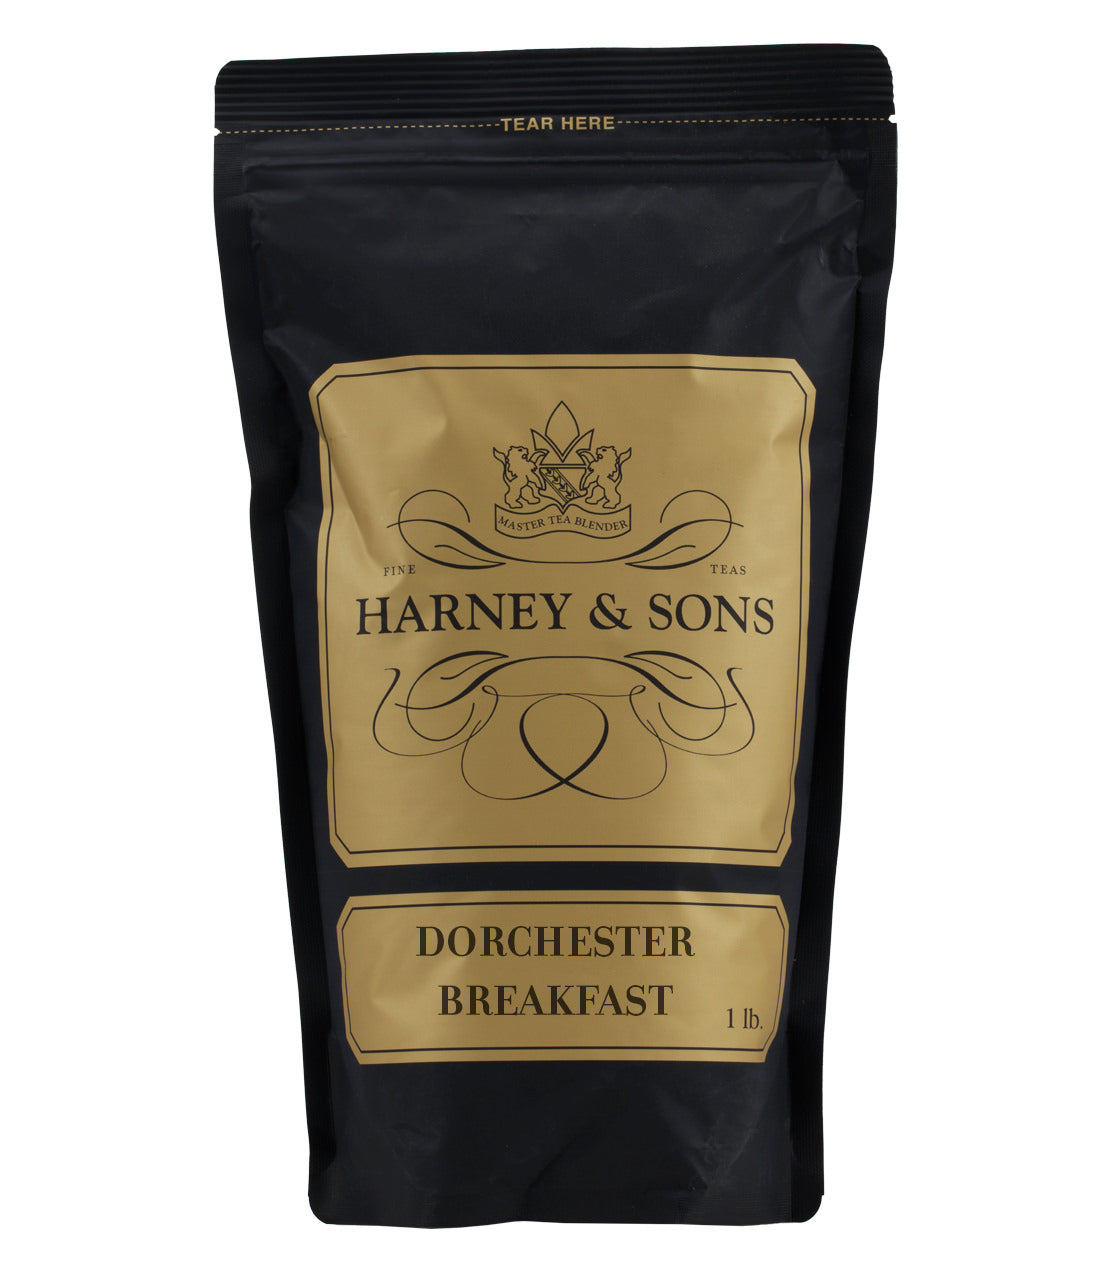 Dorchester Breakfast - Loose 1 lb. Bag - Harney & Sons Fine Teas